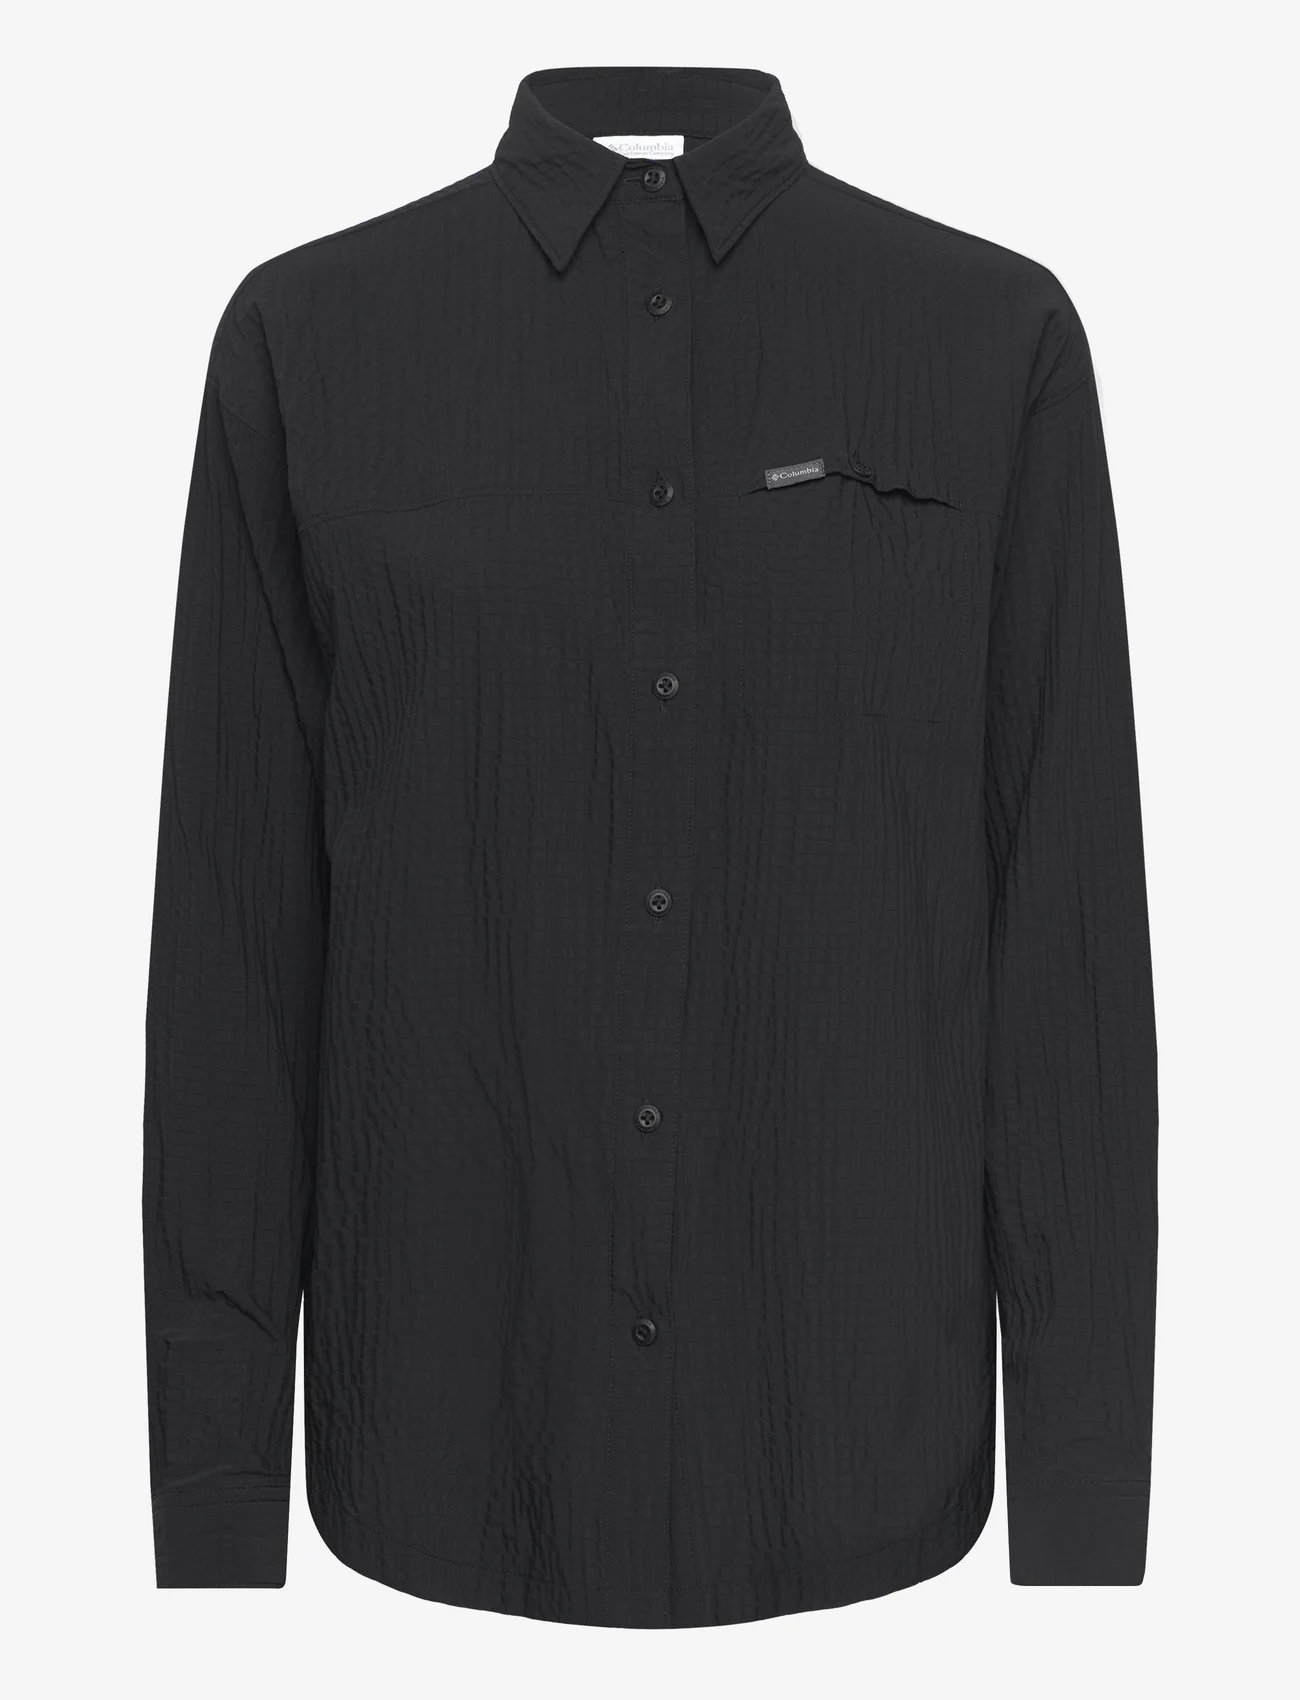 Columbia Sportswear - Boundless Trek Layering LS - langærmede skjorter - black - 0